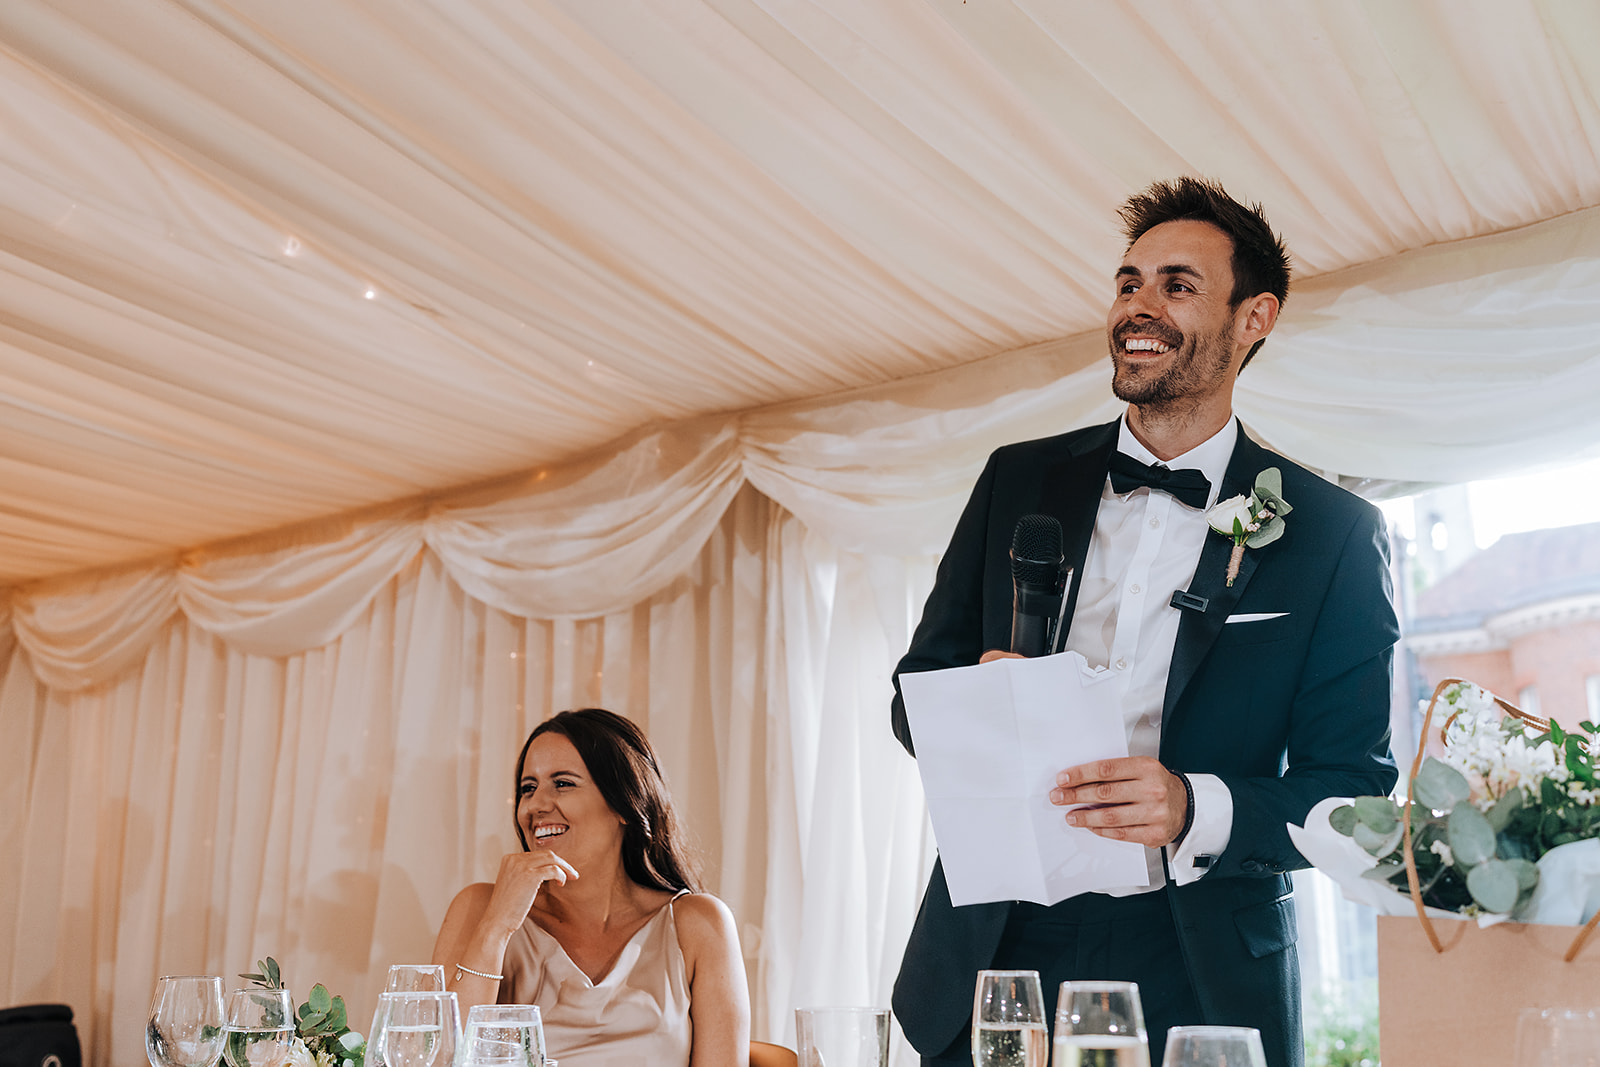 Hedingham Castle Summer Wedding reception | Alex Buckland Photography